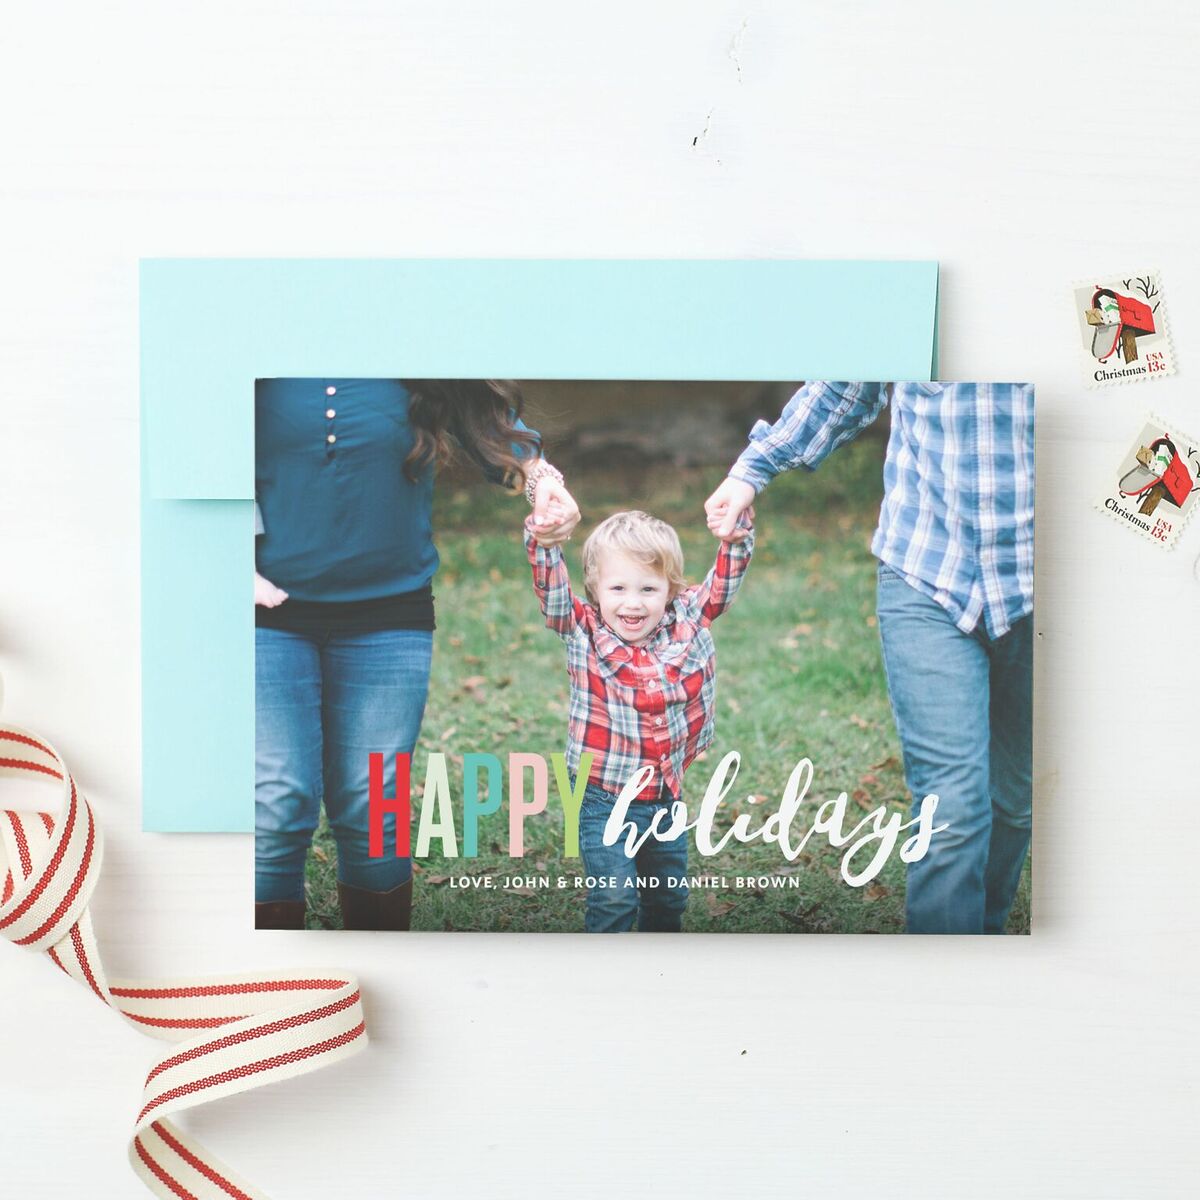 holiday cards, holiday, Christmas, Christmas cards, holiday invitations, holiday parties